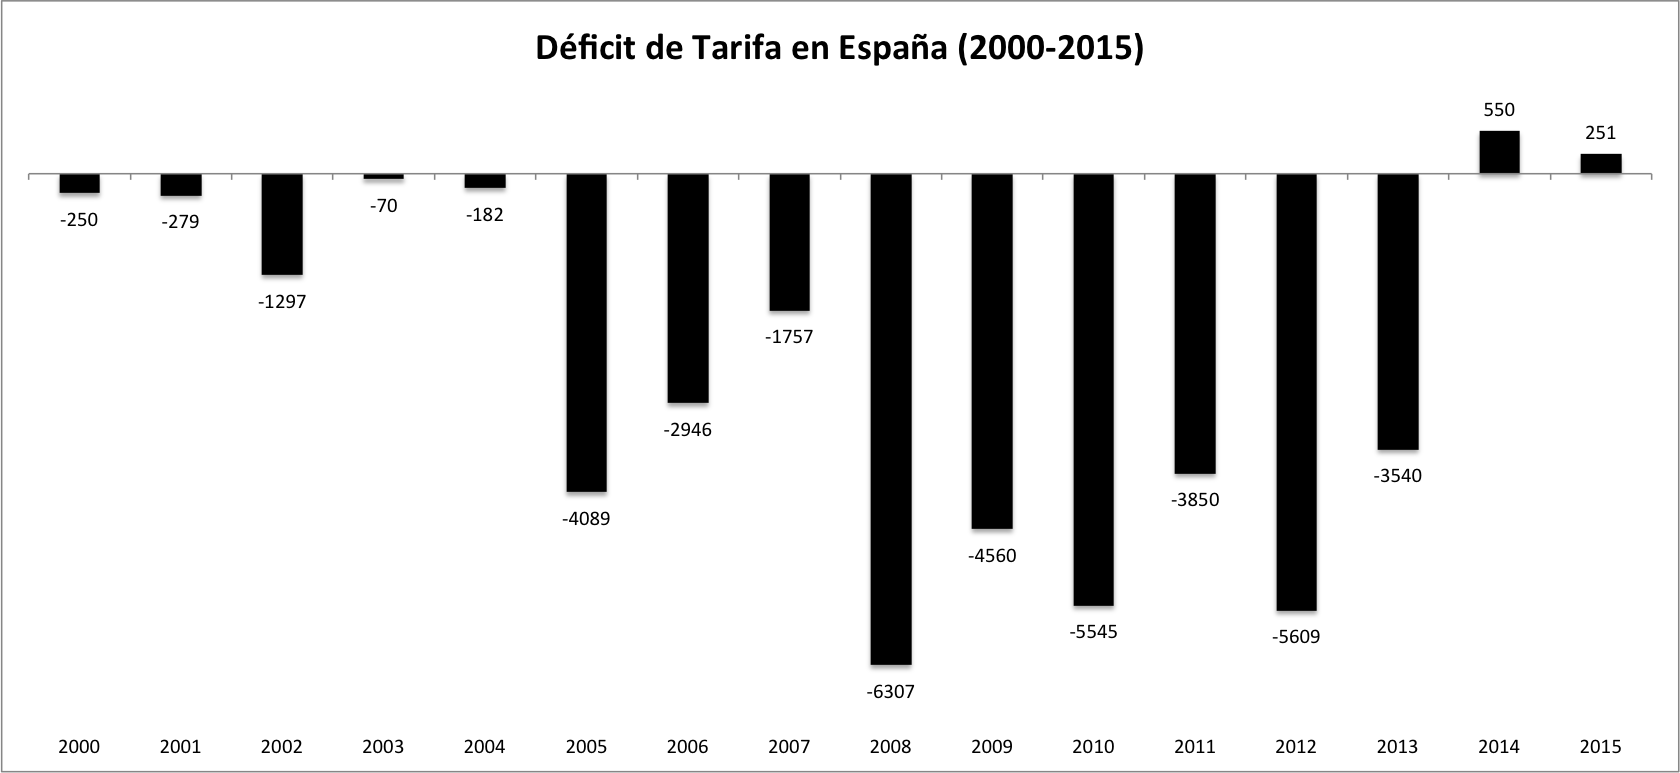 Deficit de Tarifa en España 2000-2015